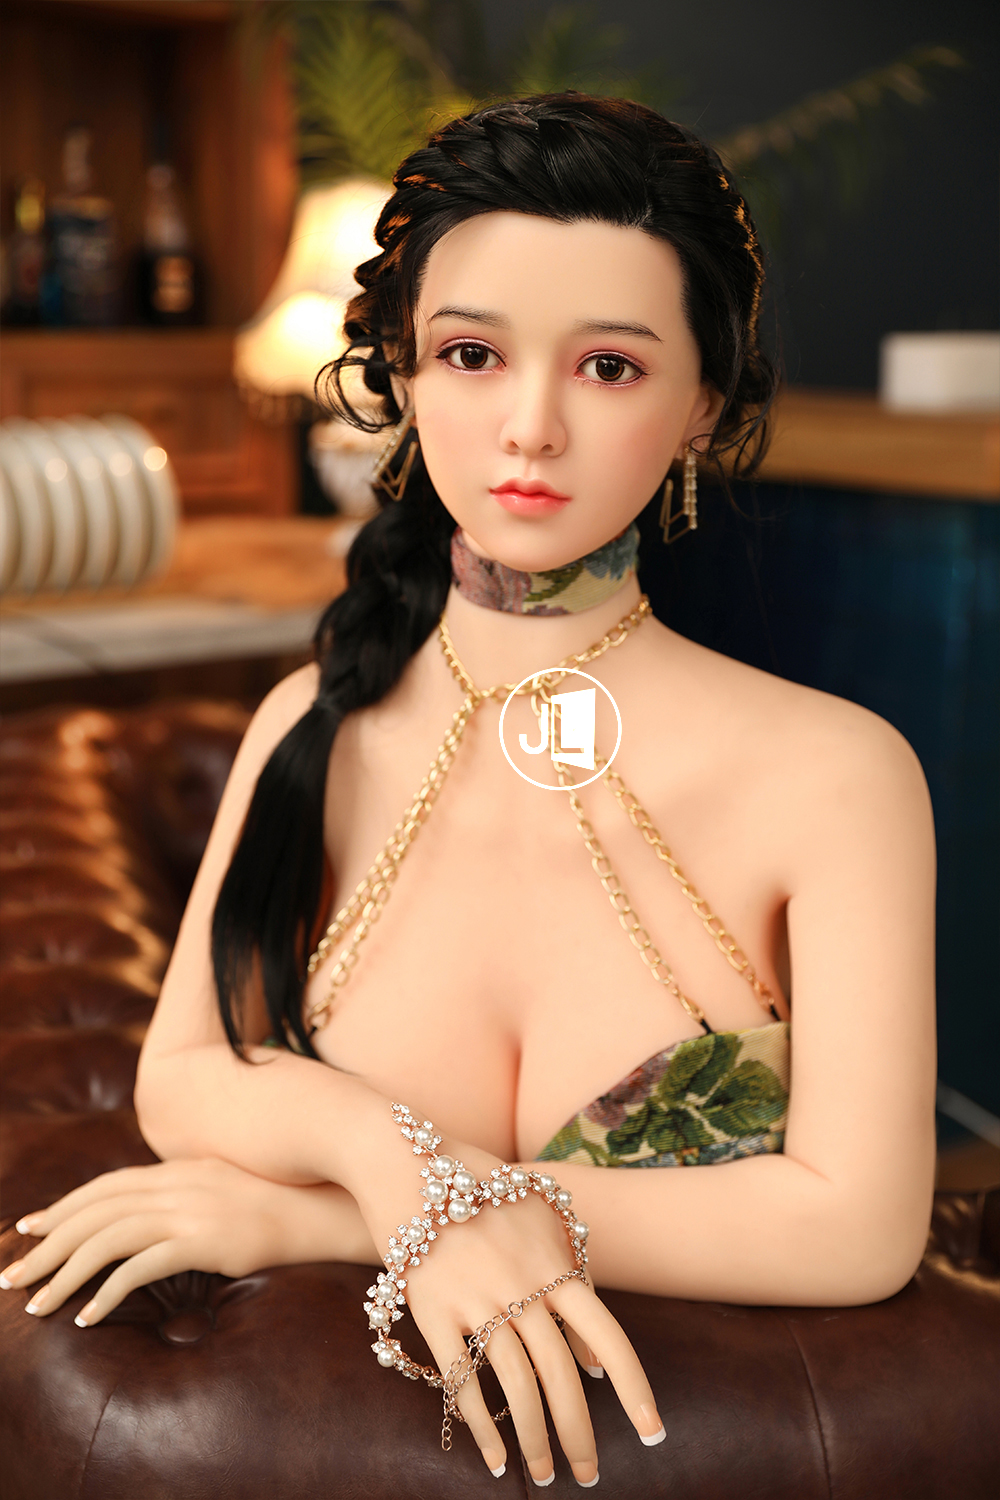 Jarliet 5ft 2 /158cm Realistic Asian Sex Doll - Carla